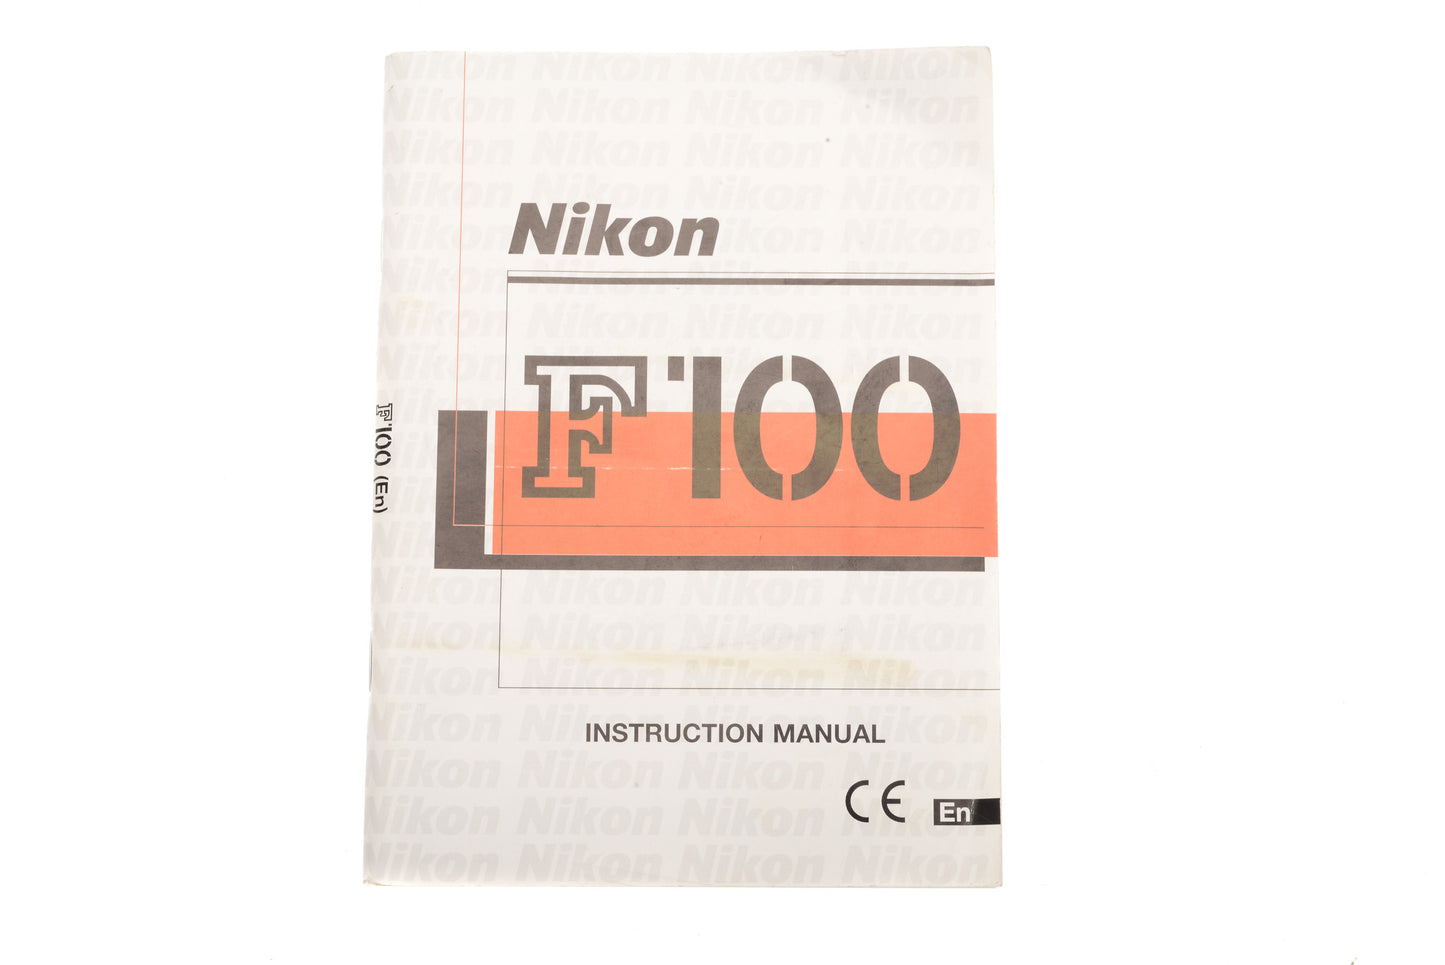 Nikon F100 Instruction Manual - Accessory